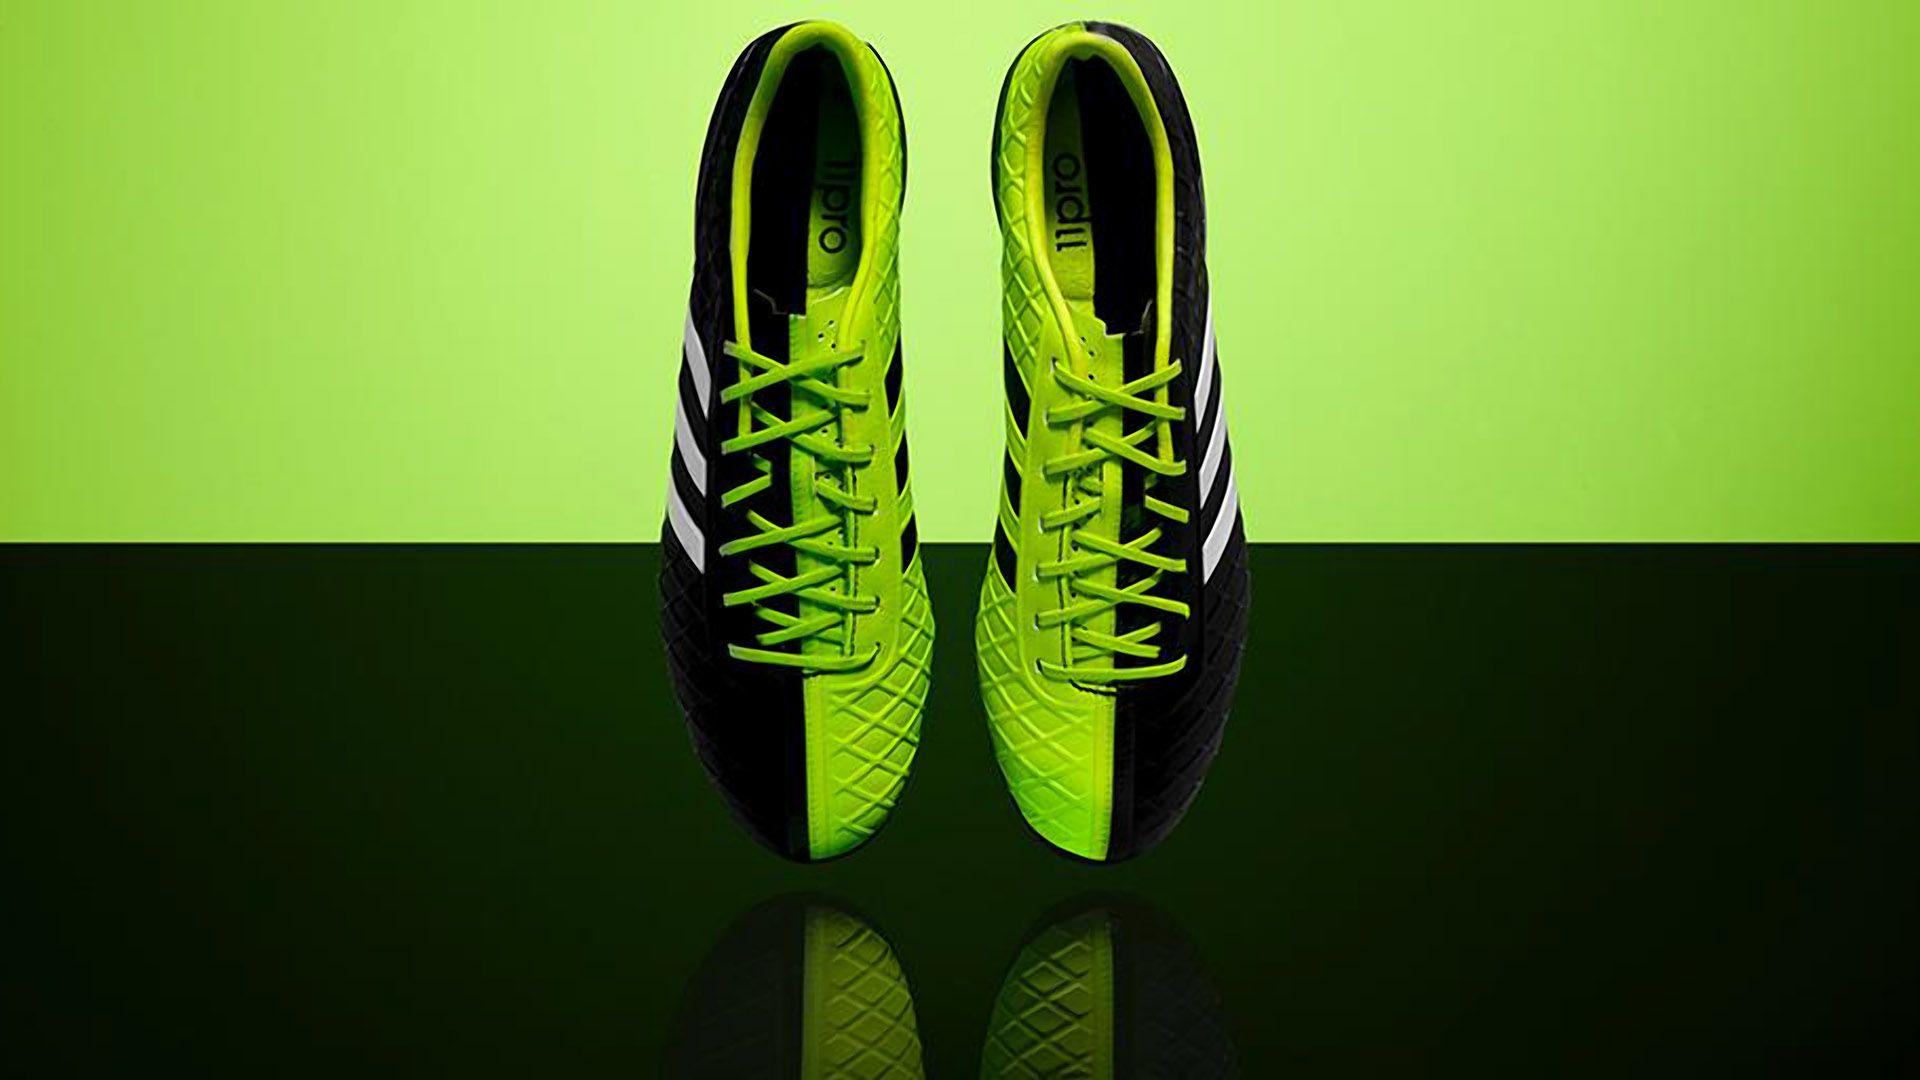 Adidas Adipure 11pro Super Light Football Boots Wallpaper free